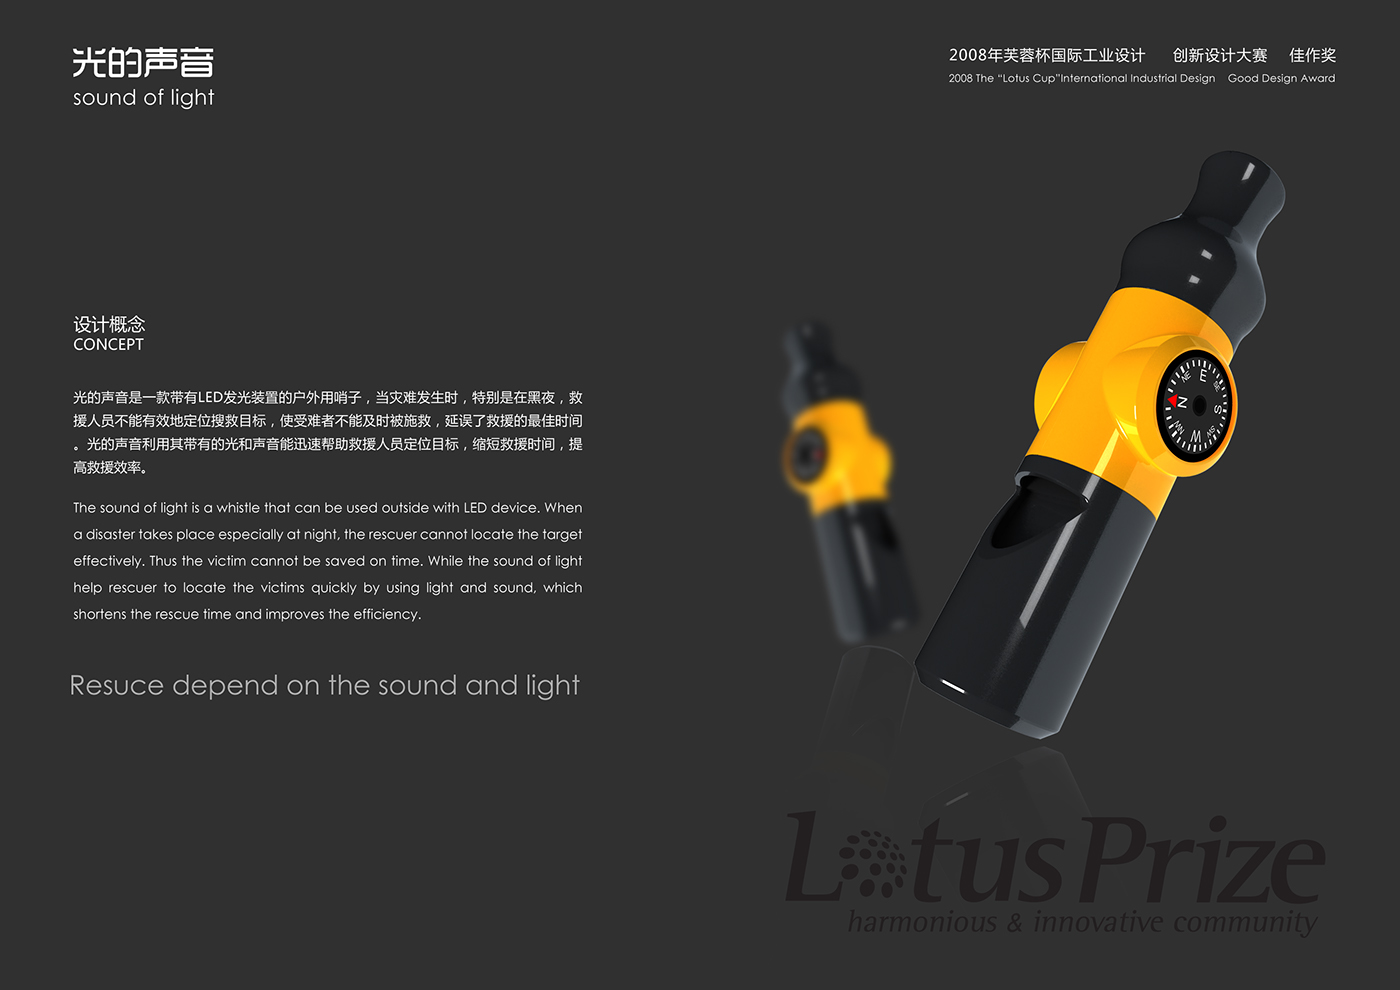 whistle LED device  Rescue design